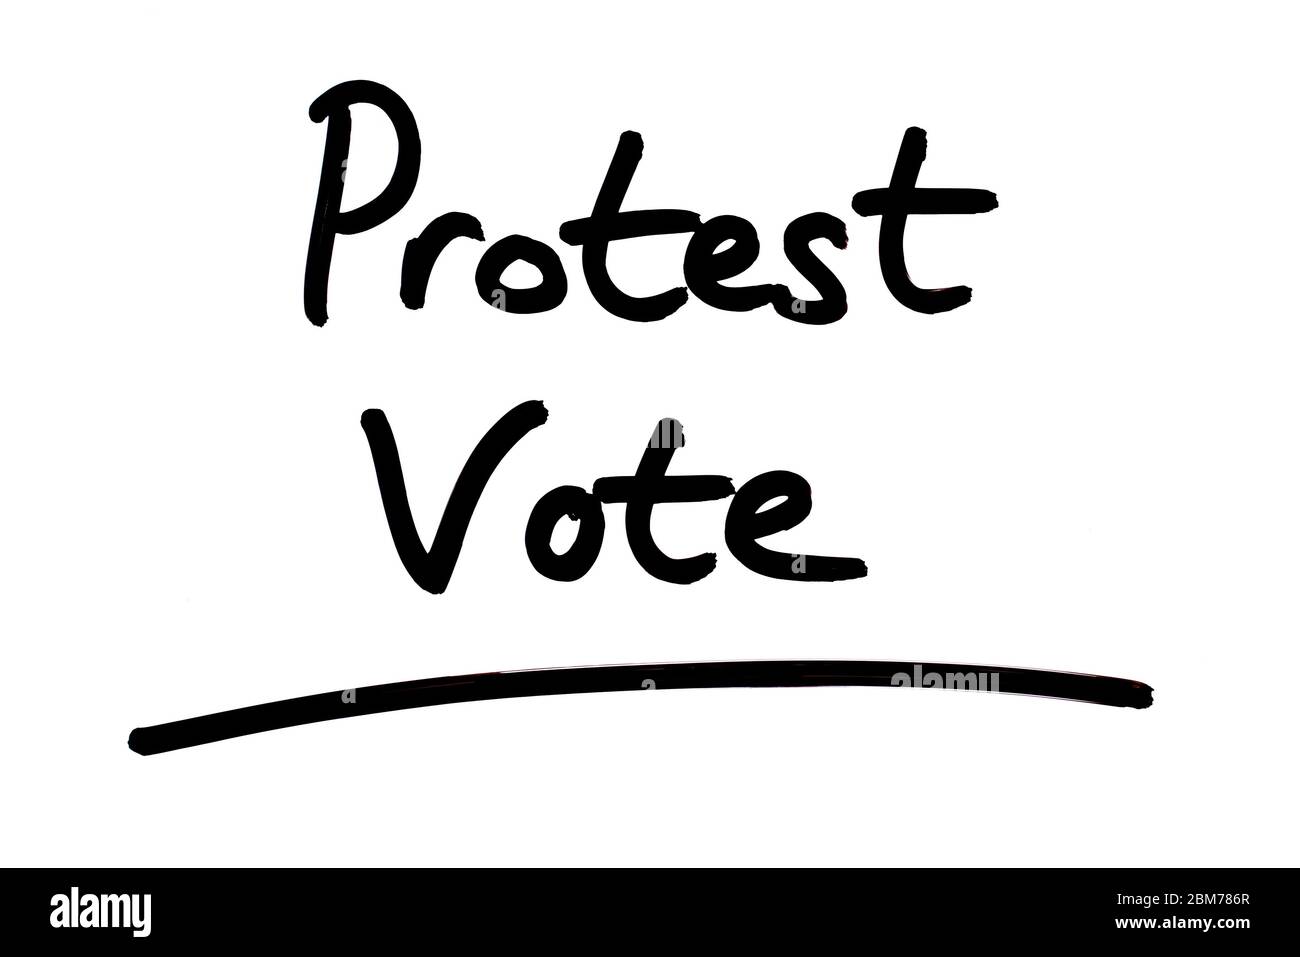 Protest Vote handwritten on a white background. Stock Photo